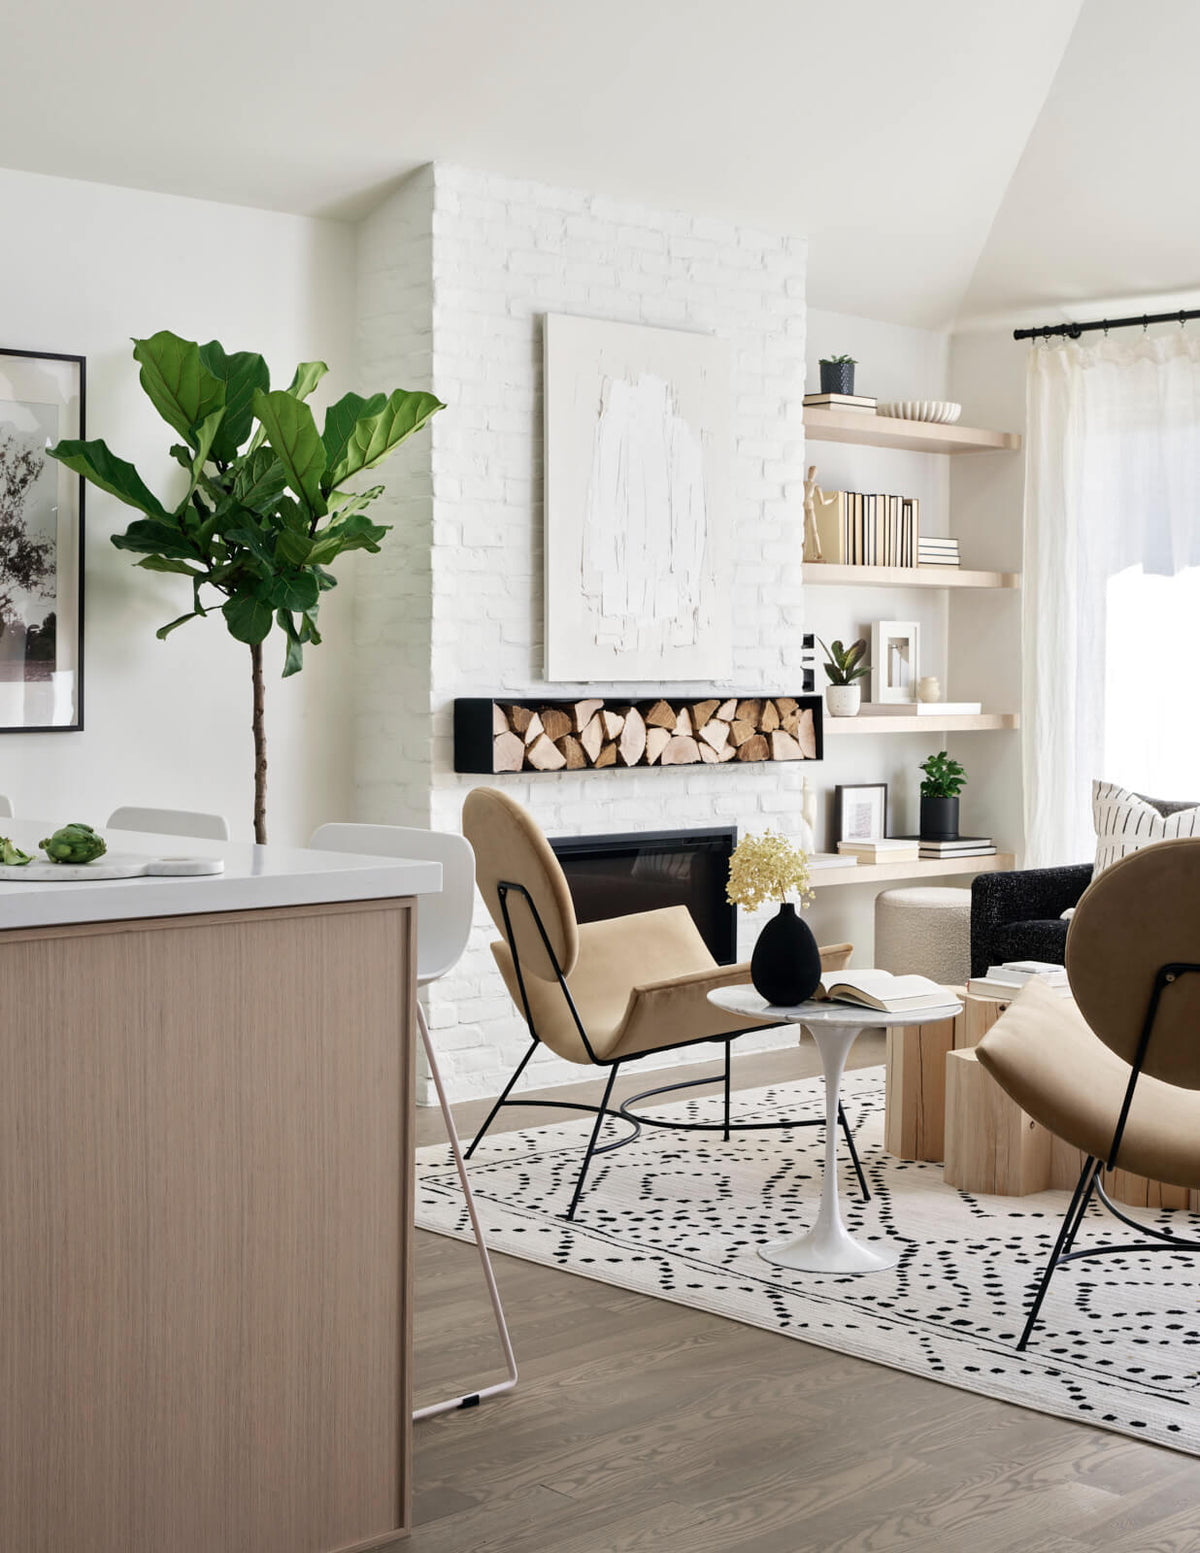 Brian McCourt Design - Living Room